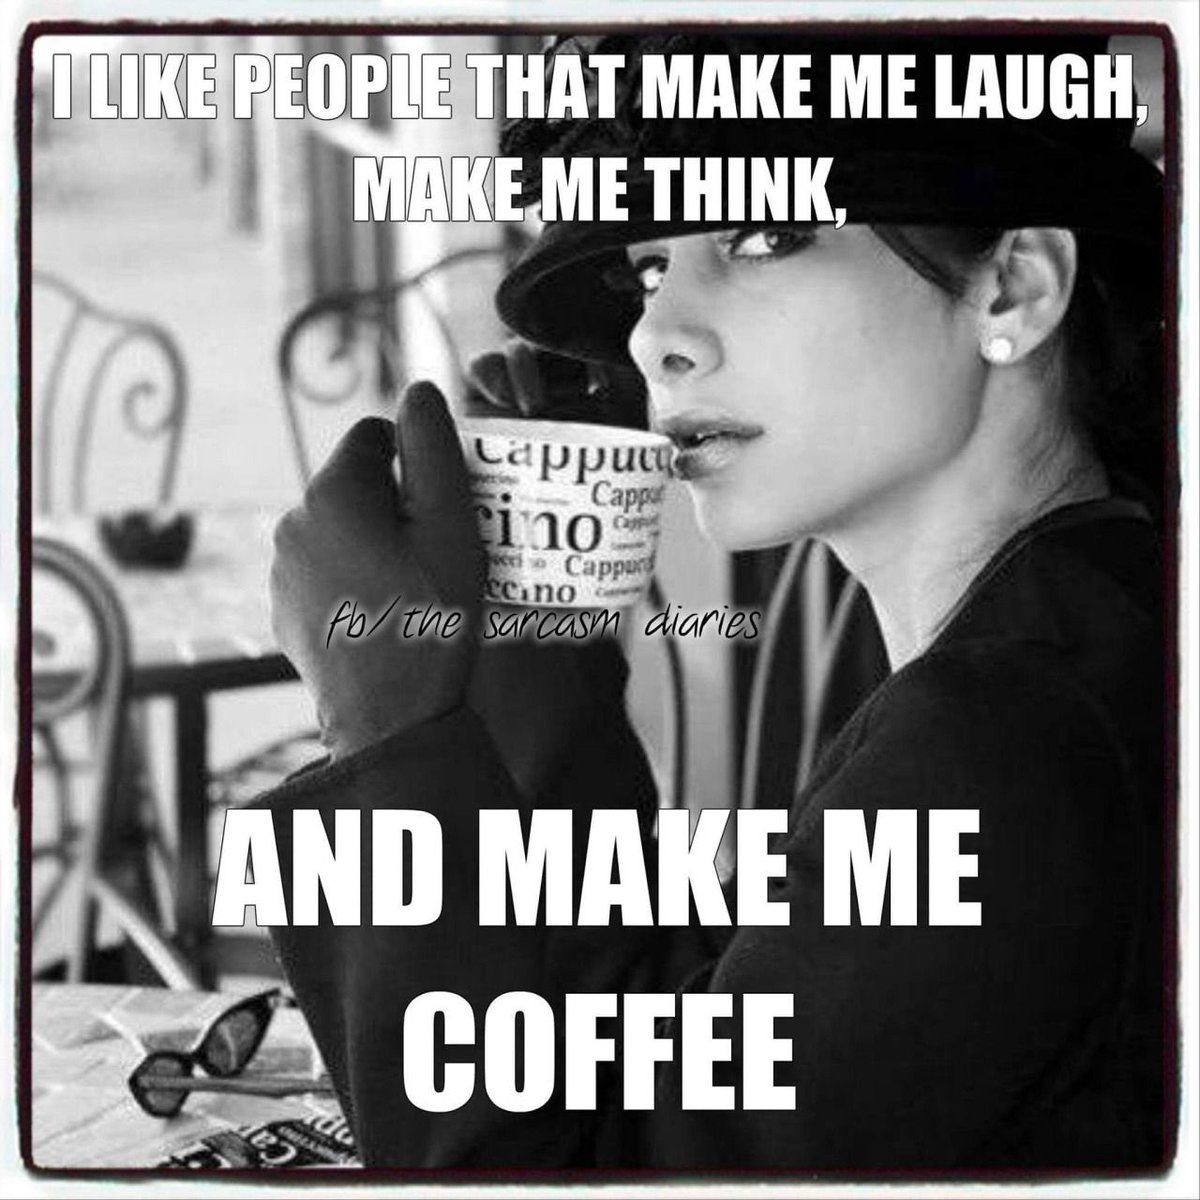 Who needs anything else?! ☕️😎
#coffeeislove #coffeeislife #butfirstcoffee